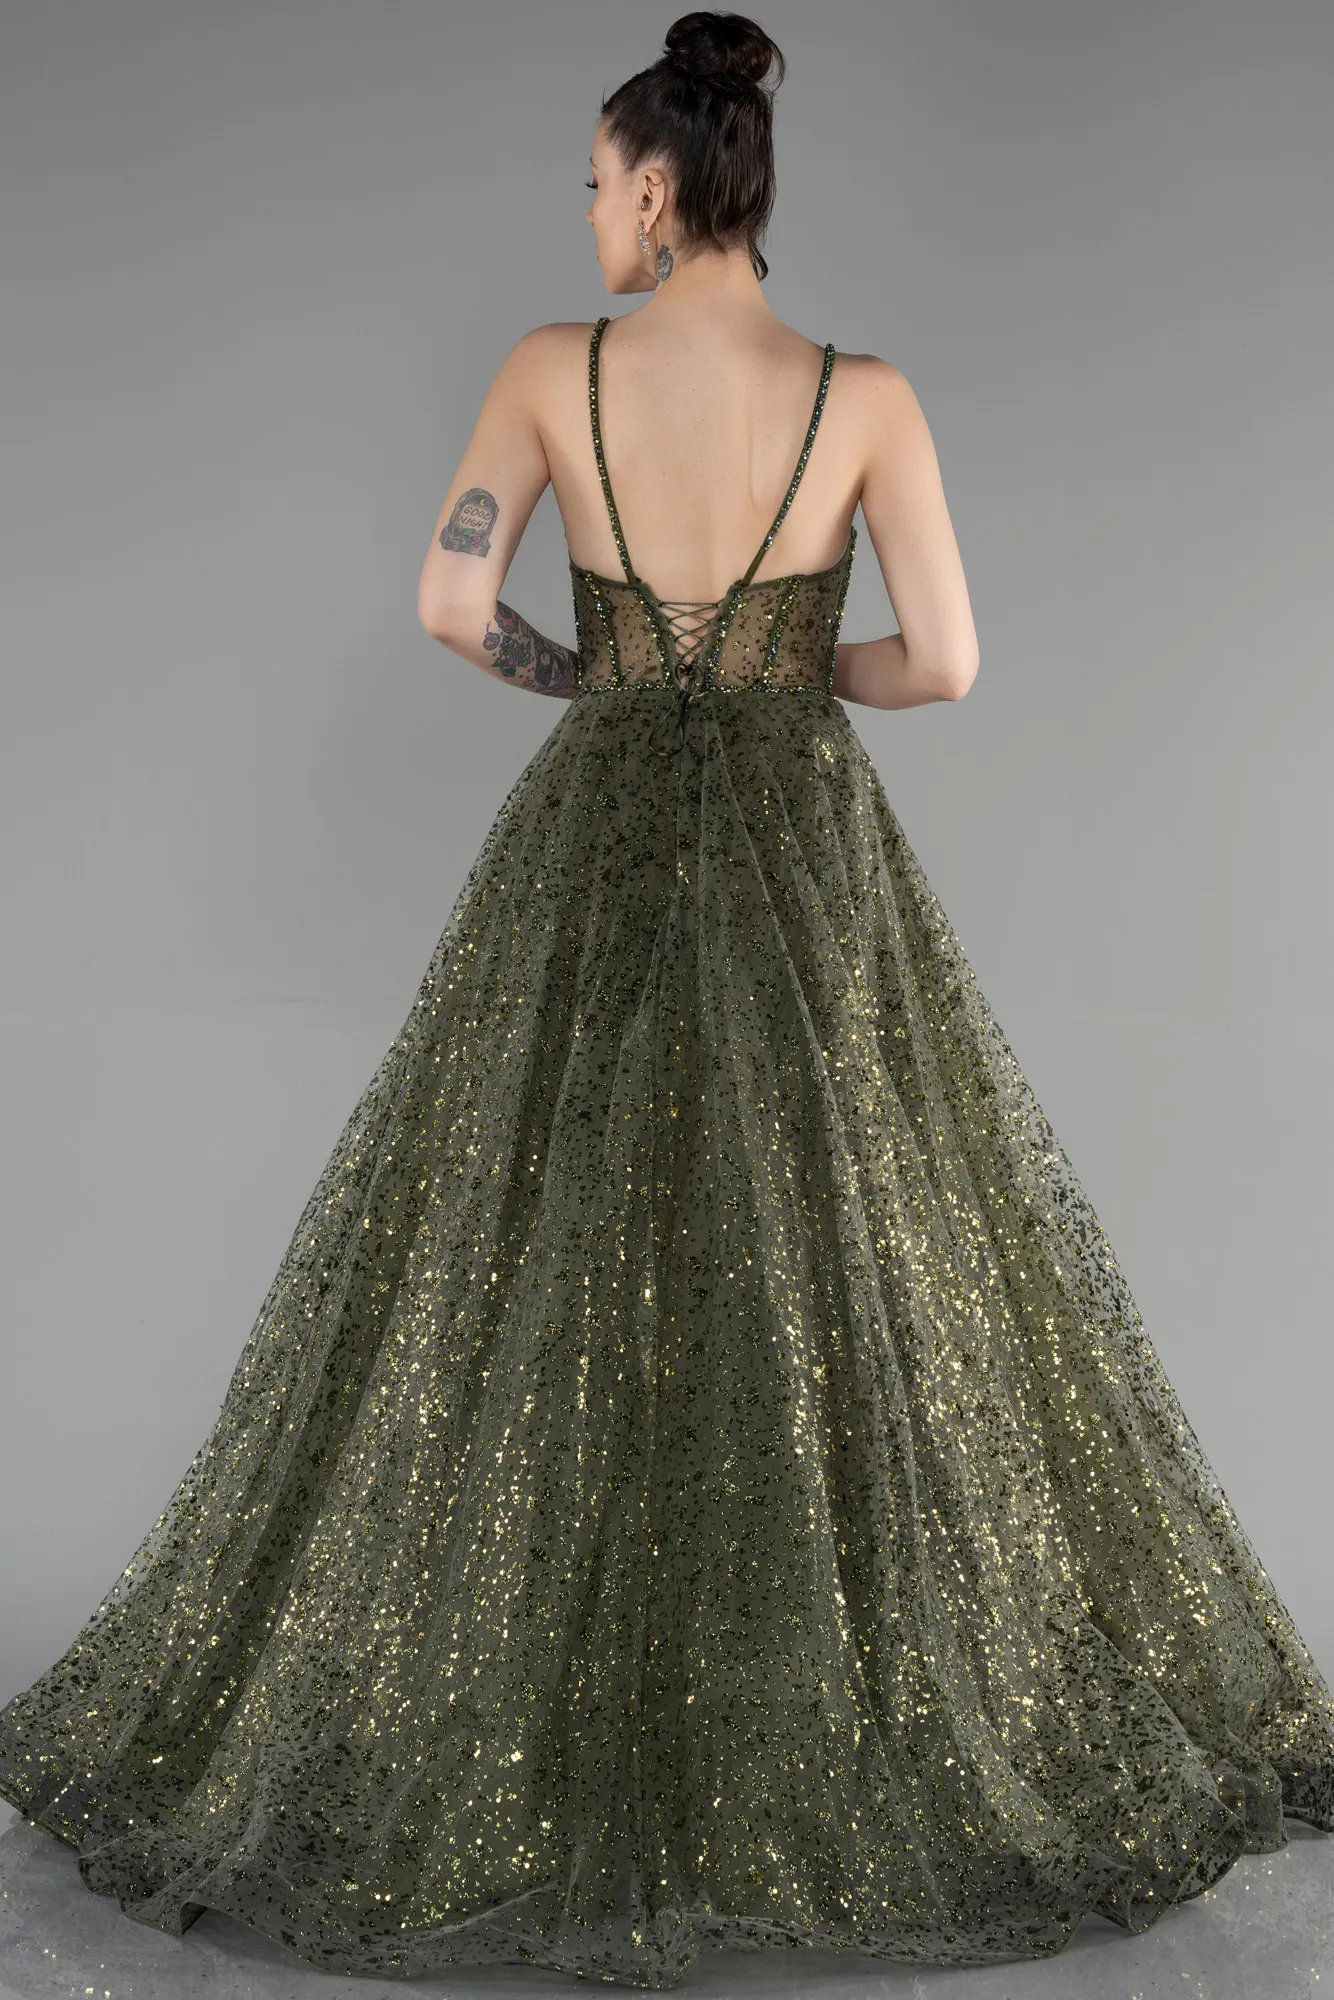 Olive Drab-Long Haute Couture Dress ABU3556